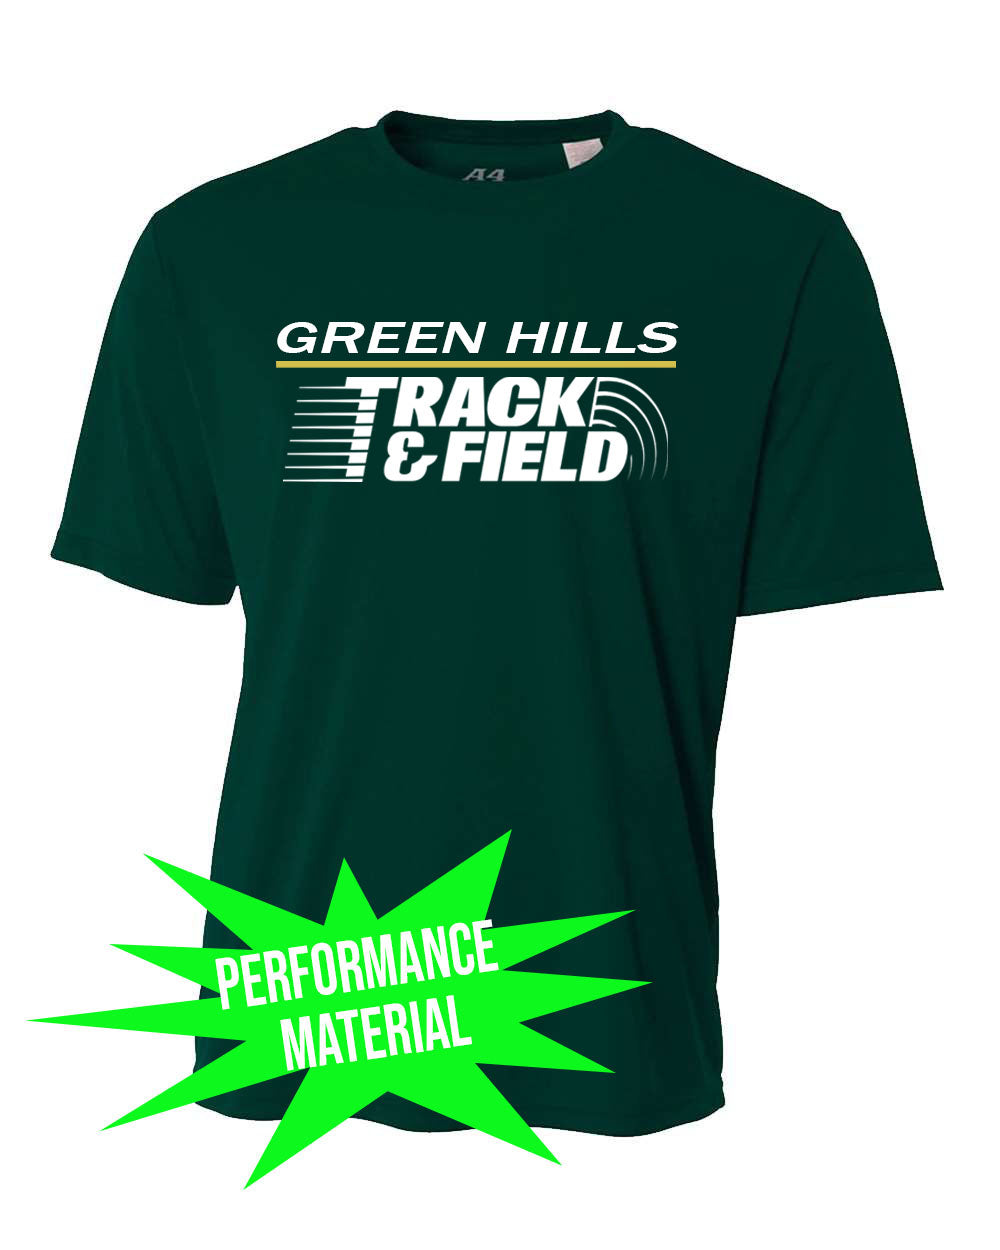 Green Hills Track Performance Material design 2 T-Shirt